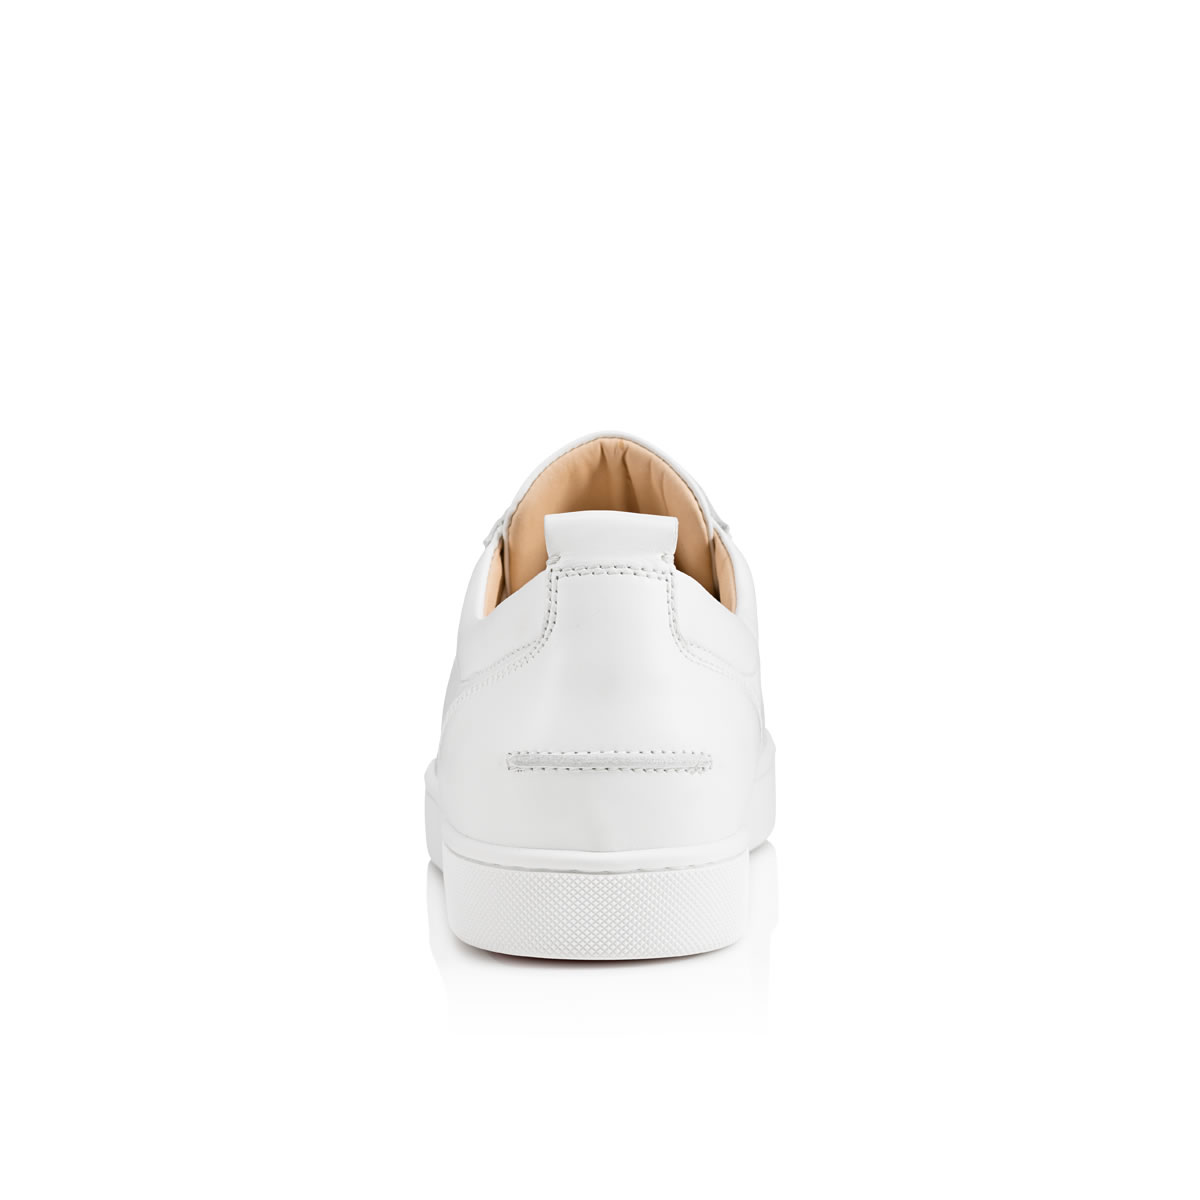 Christian Louboutin Sneakers aus Leder - Weiß - Größe 40 - 21274480